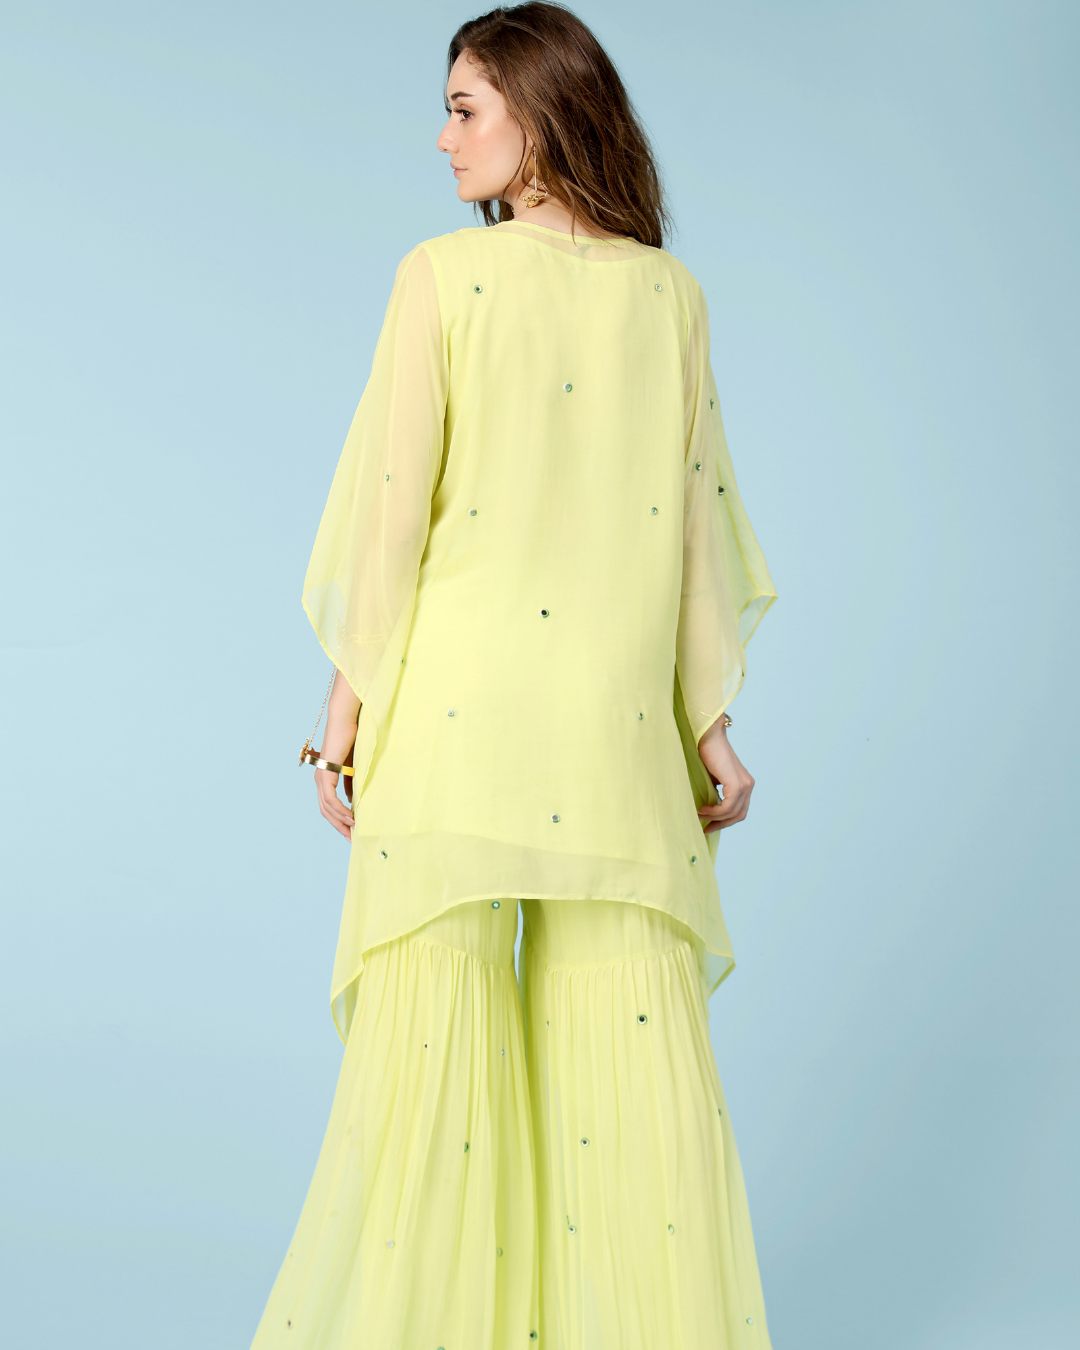 Black Partywear Embroidered Georgette Sharara Suit at Rs 2999.00 | Sharara  Set, Sharara Suit Set, Sharara Dress, शरारा सूट - Maia Nava, Bengaluru |  ID: 2851807740191